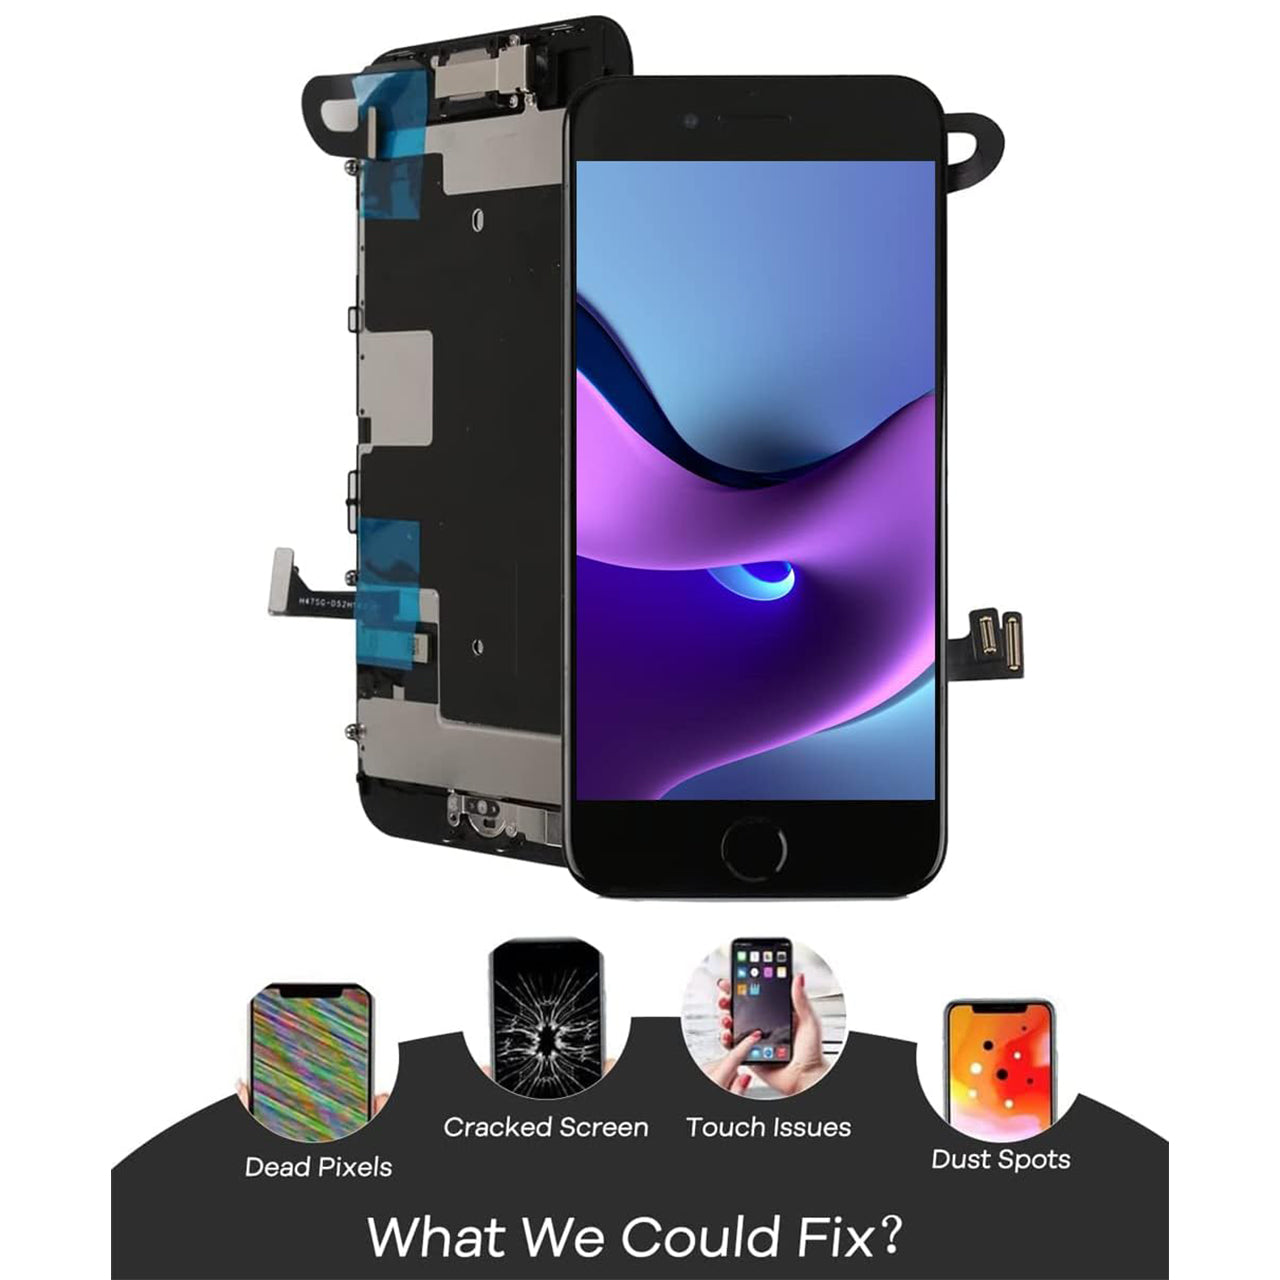 iPhone 7 Plus reparacion de pantalla tactil LCD y digitalizador 5.5” - iPhone 7 Plus LCD touch screen digitizer replacemente 5.5”